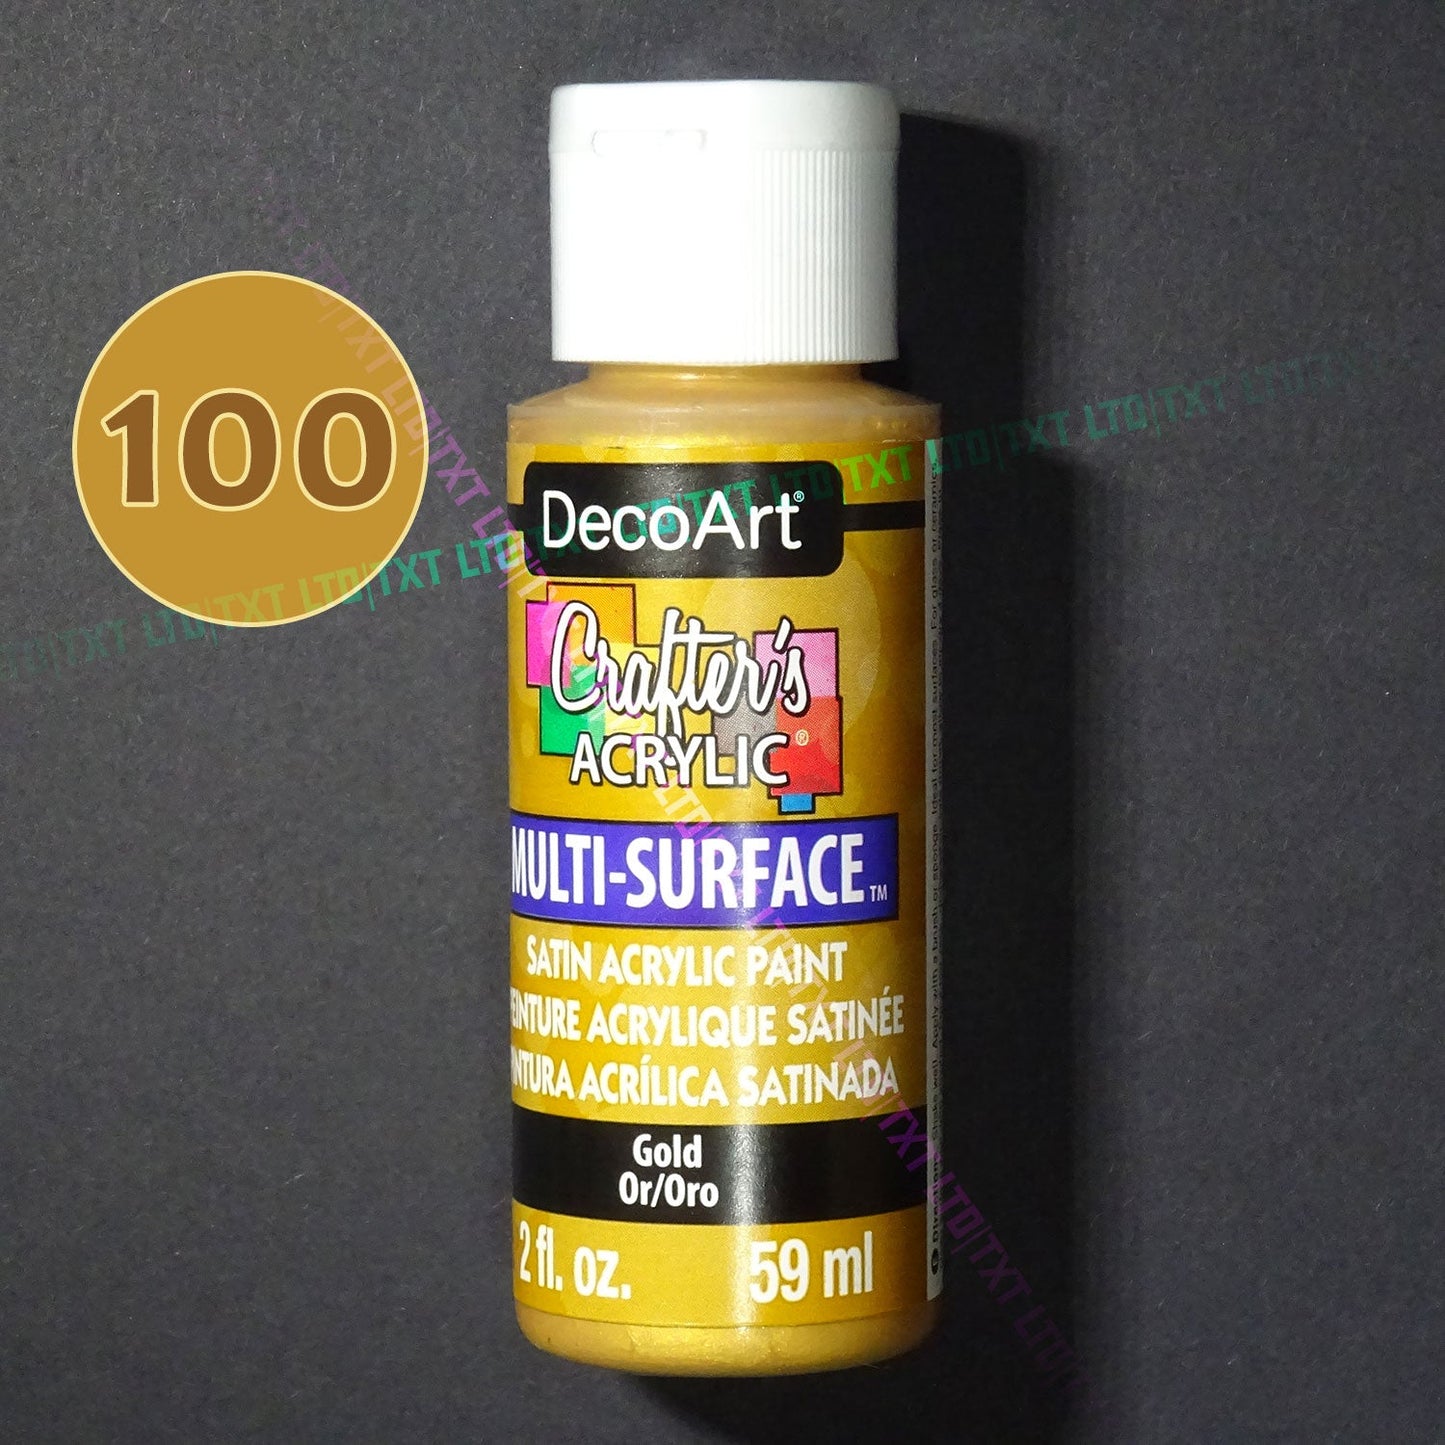 DecoArt Crafters Acrylique multi-surfaces, 59 ml/2 oz.